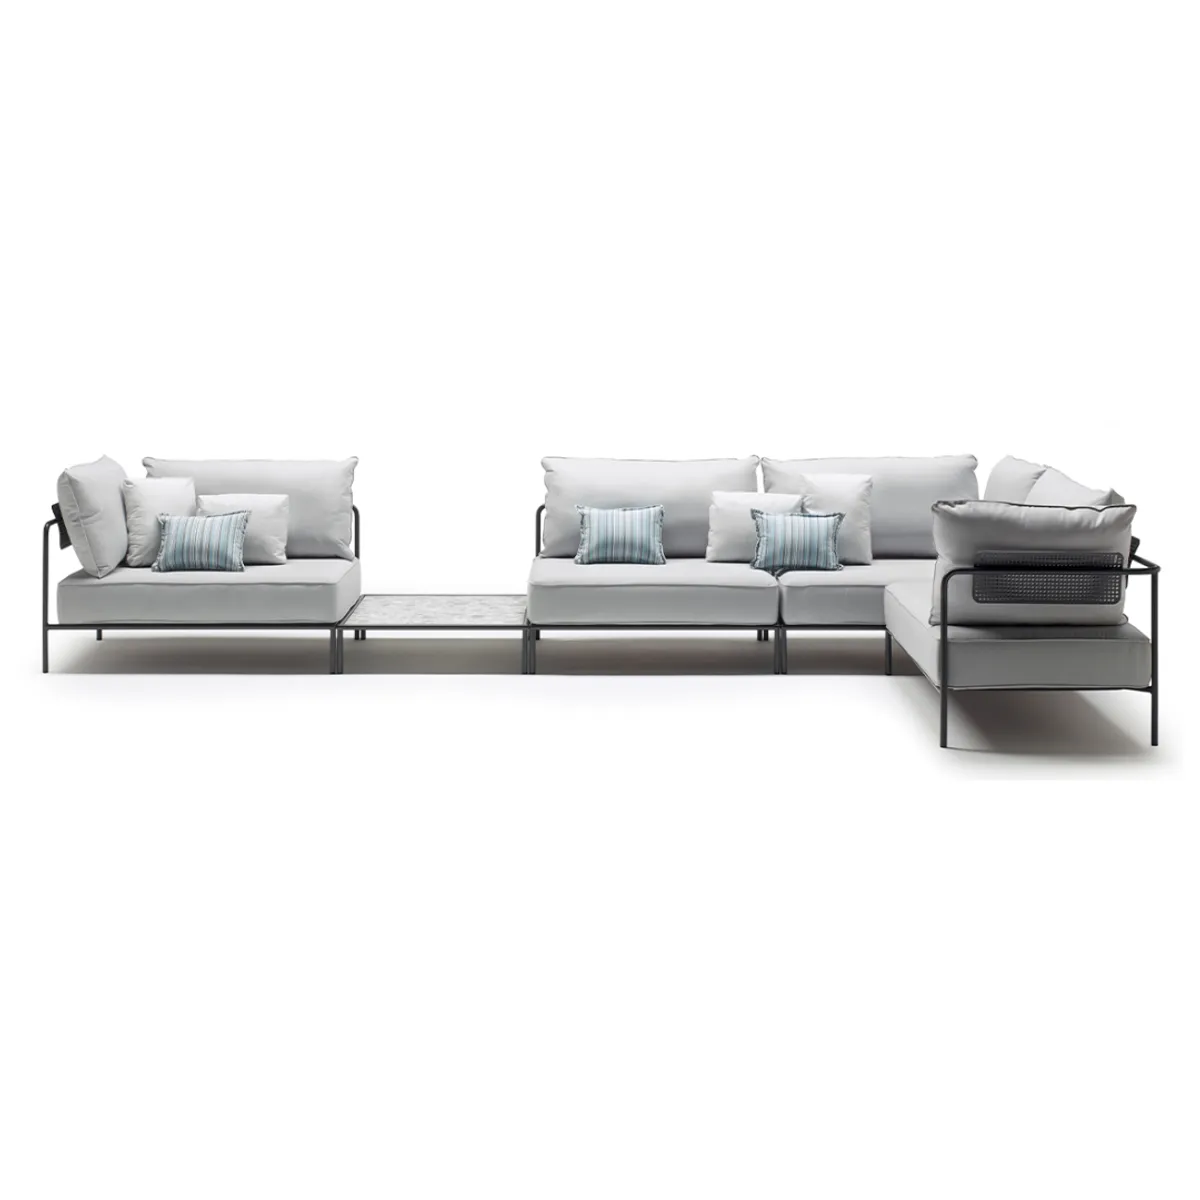 Dahlia modular sofa 8